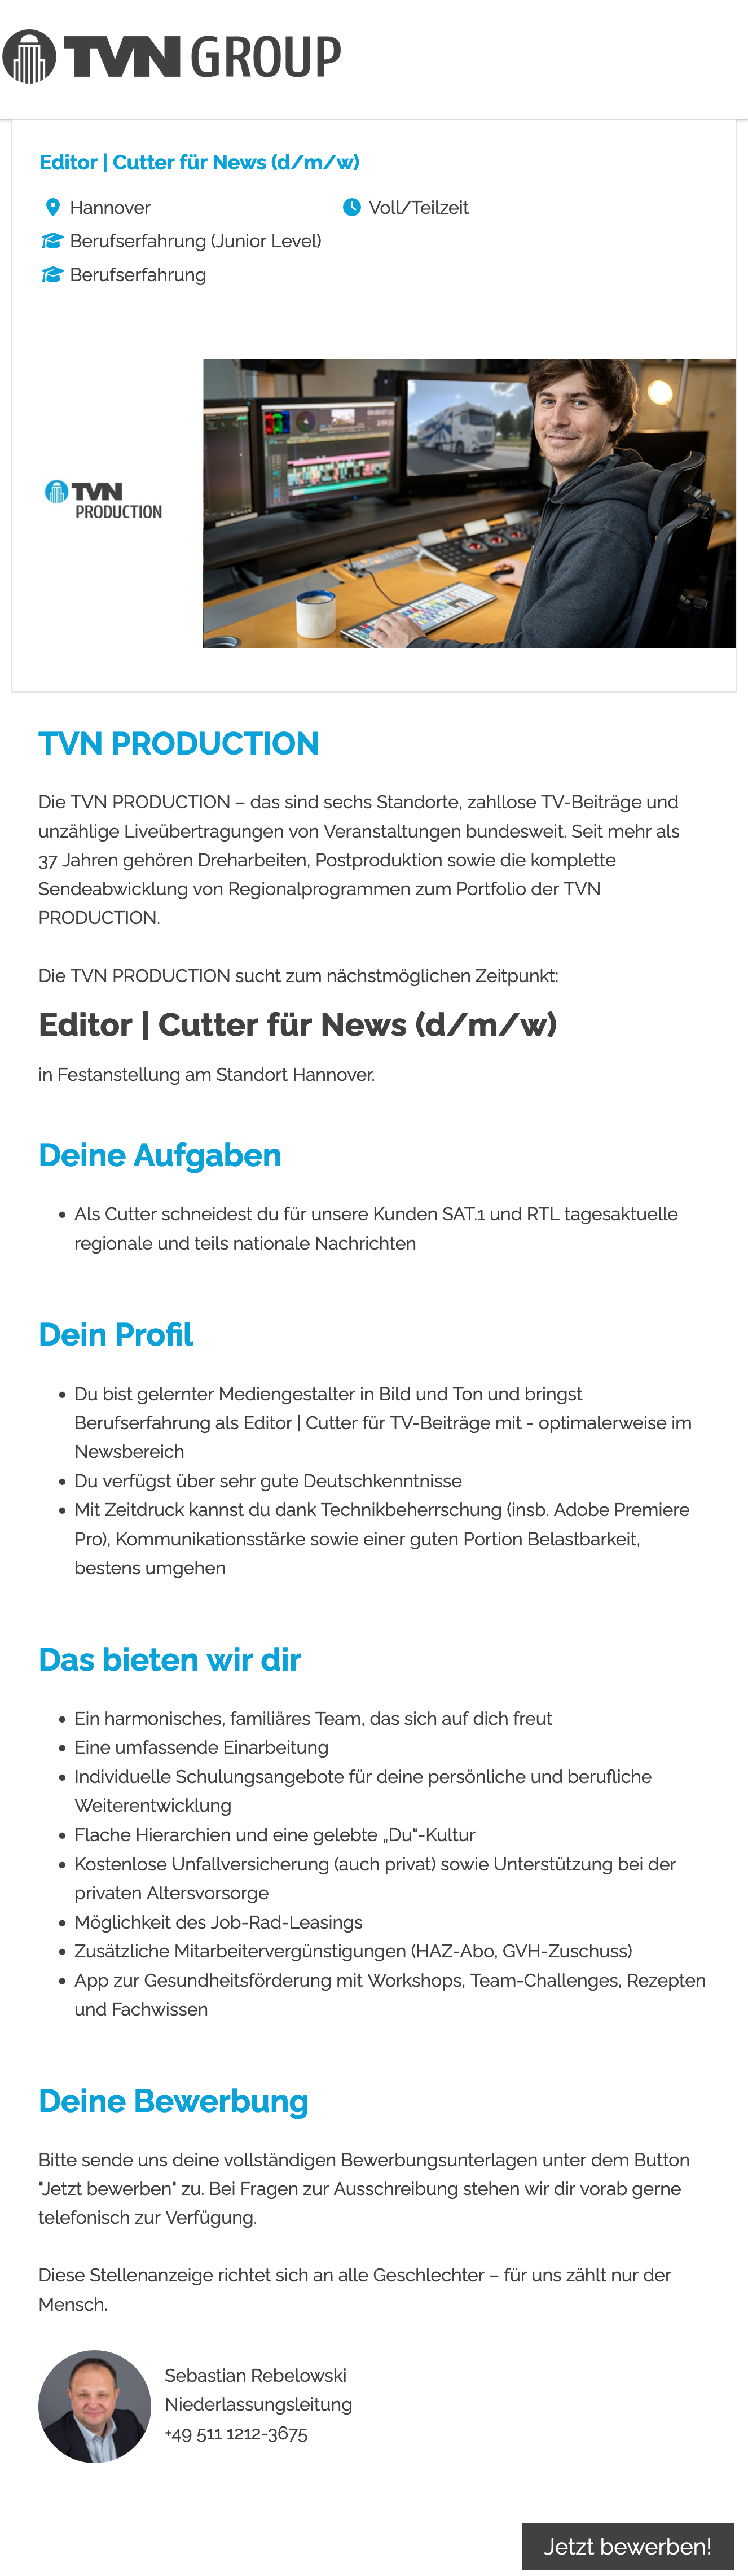 Editor / Cutter für News (d/m/w)